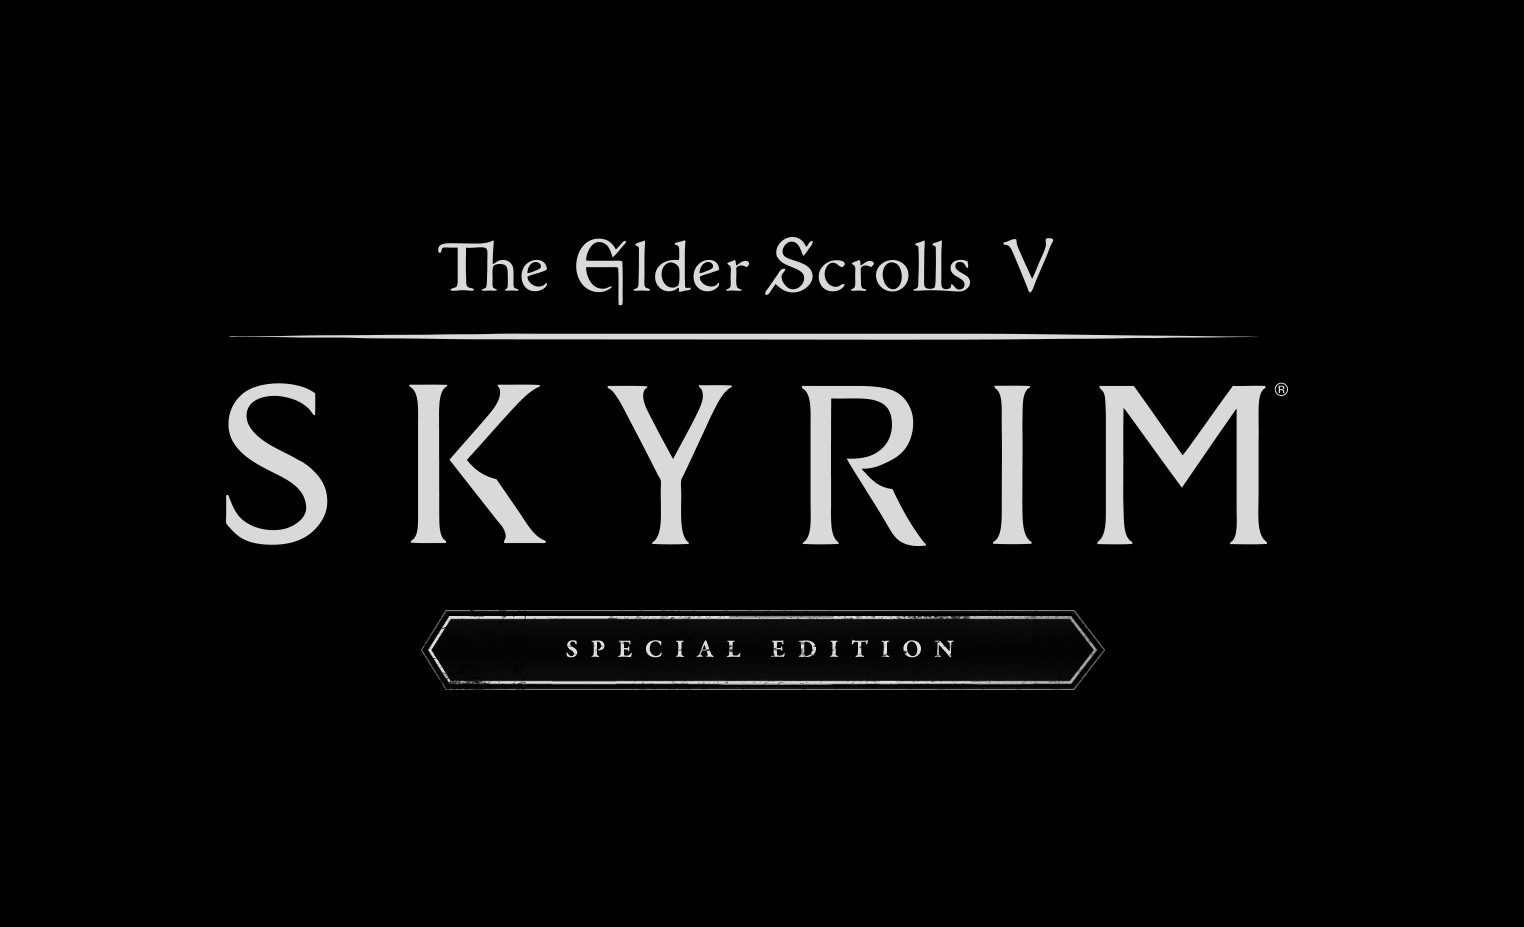 Ps4 Xbox One Pc The Elder Scrolls V Skyrim Special Edition 発売日決定 11月に再び スカイリムへ 2枚目の写真 画像 Game Spark 国内 海外ゲーム情報サイト